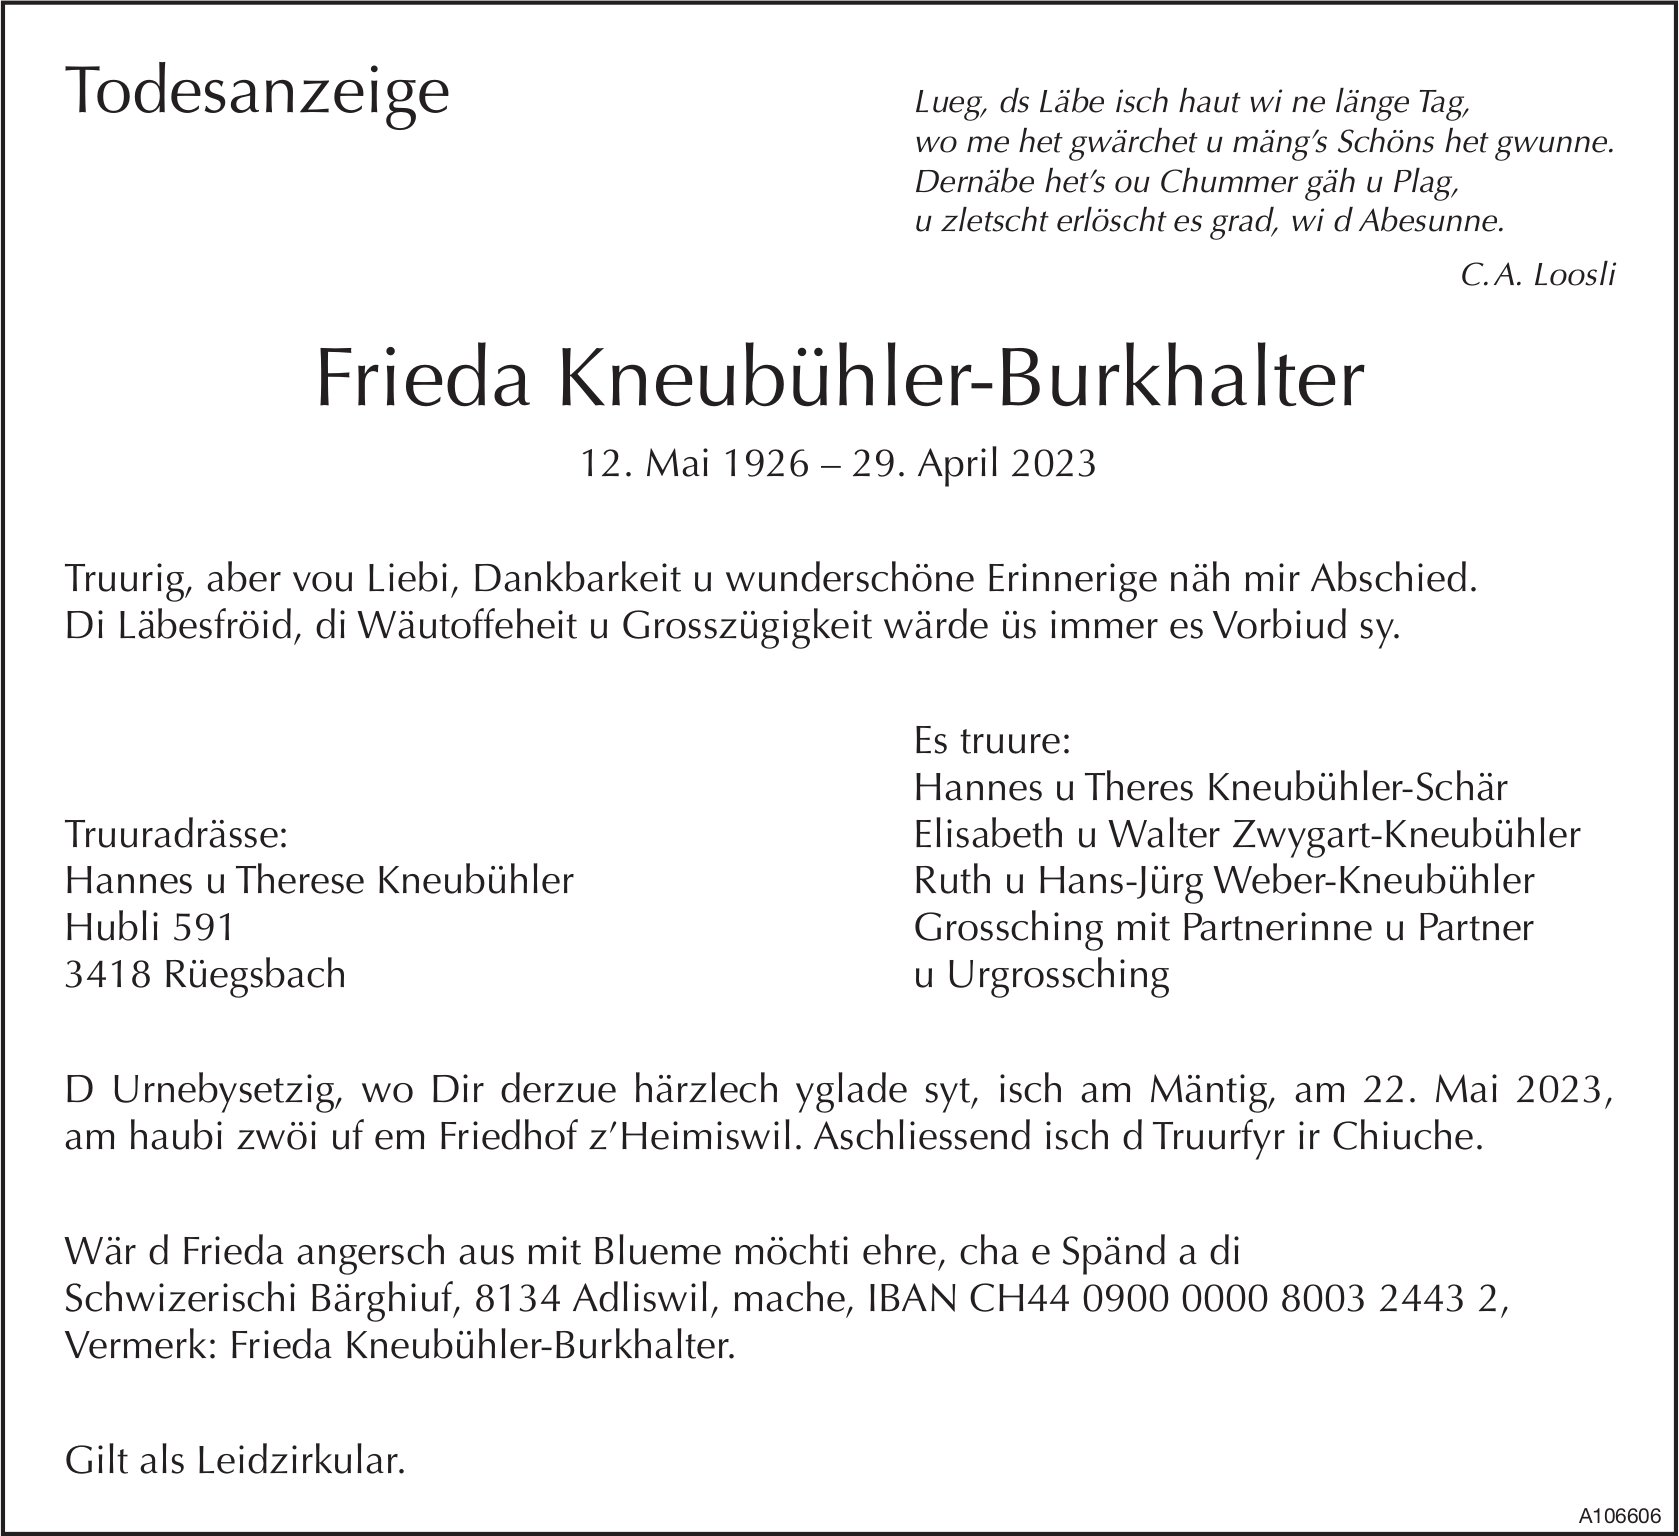 Frieda Kneubühler-Burkhalter, April 2023 / TA